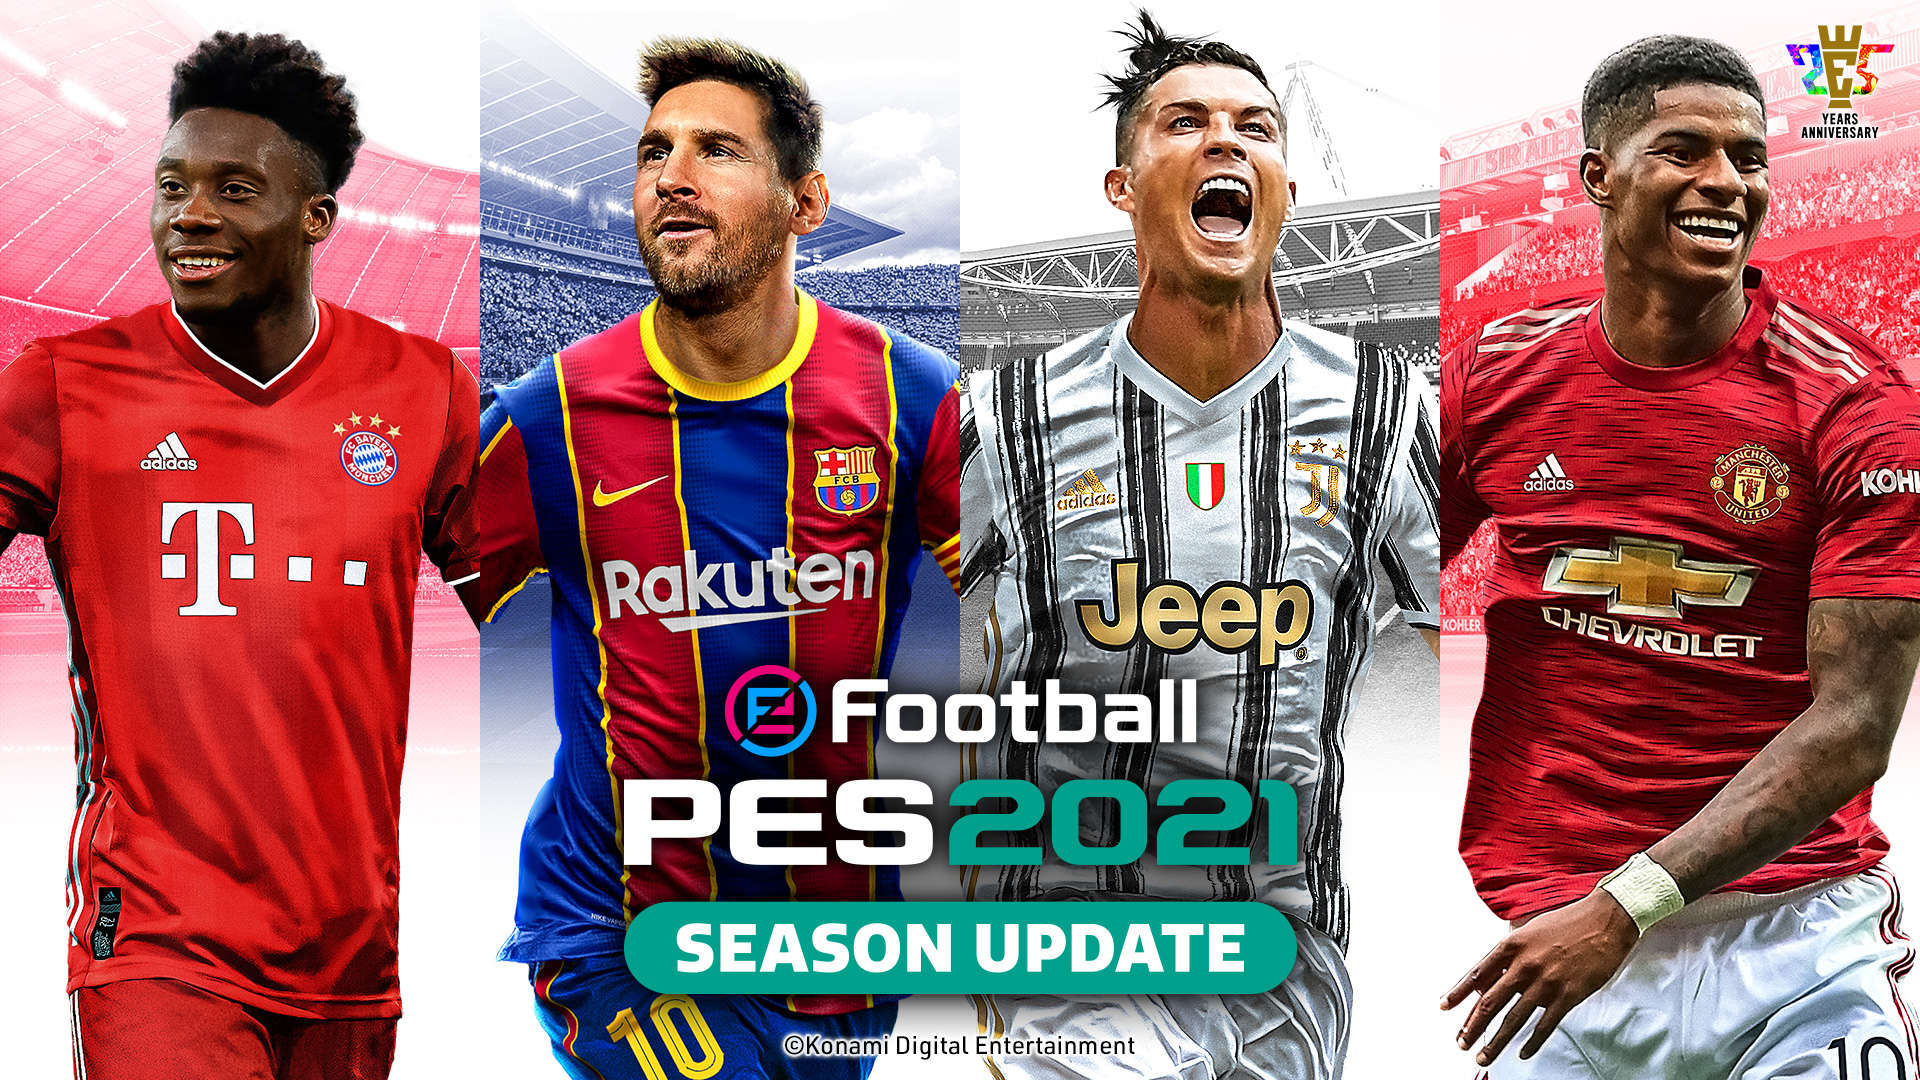 Player's favorite games: eFootball PES 2021 Season Update